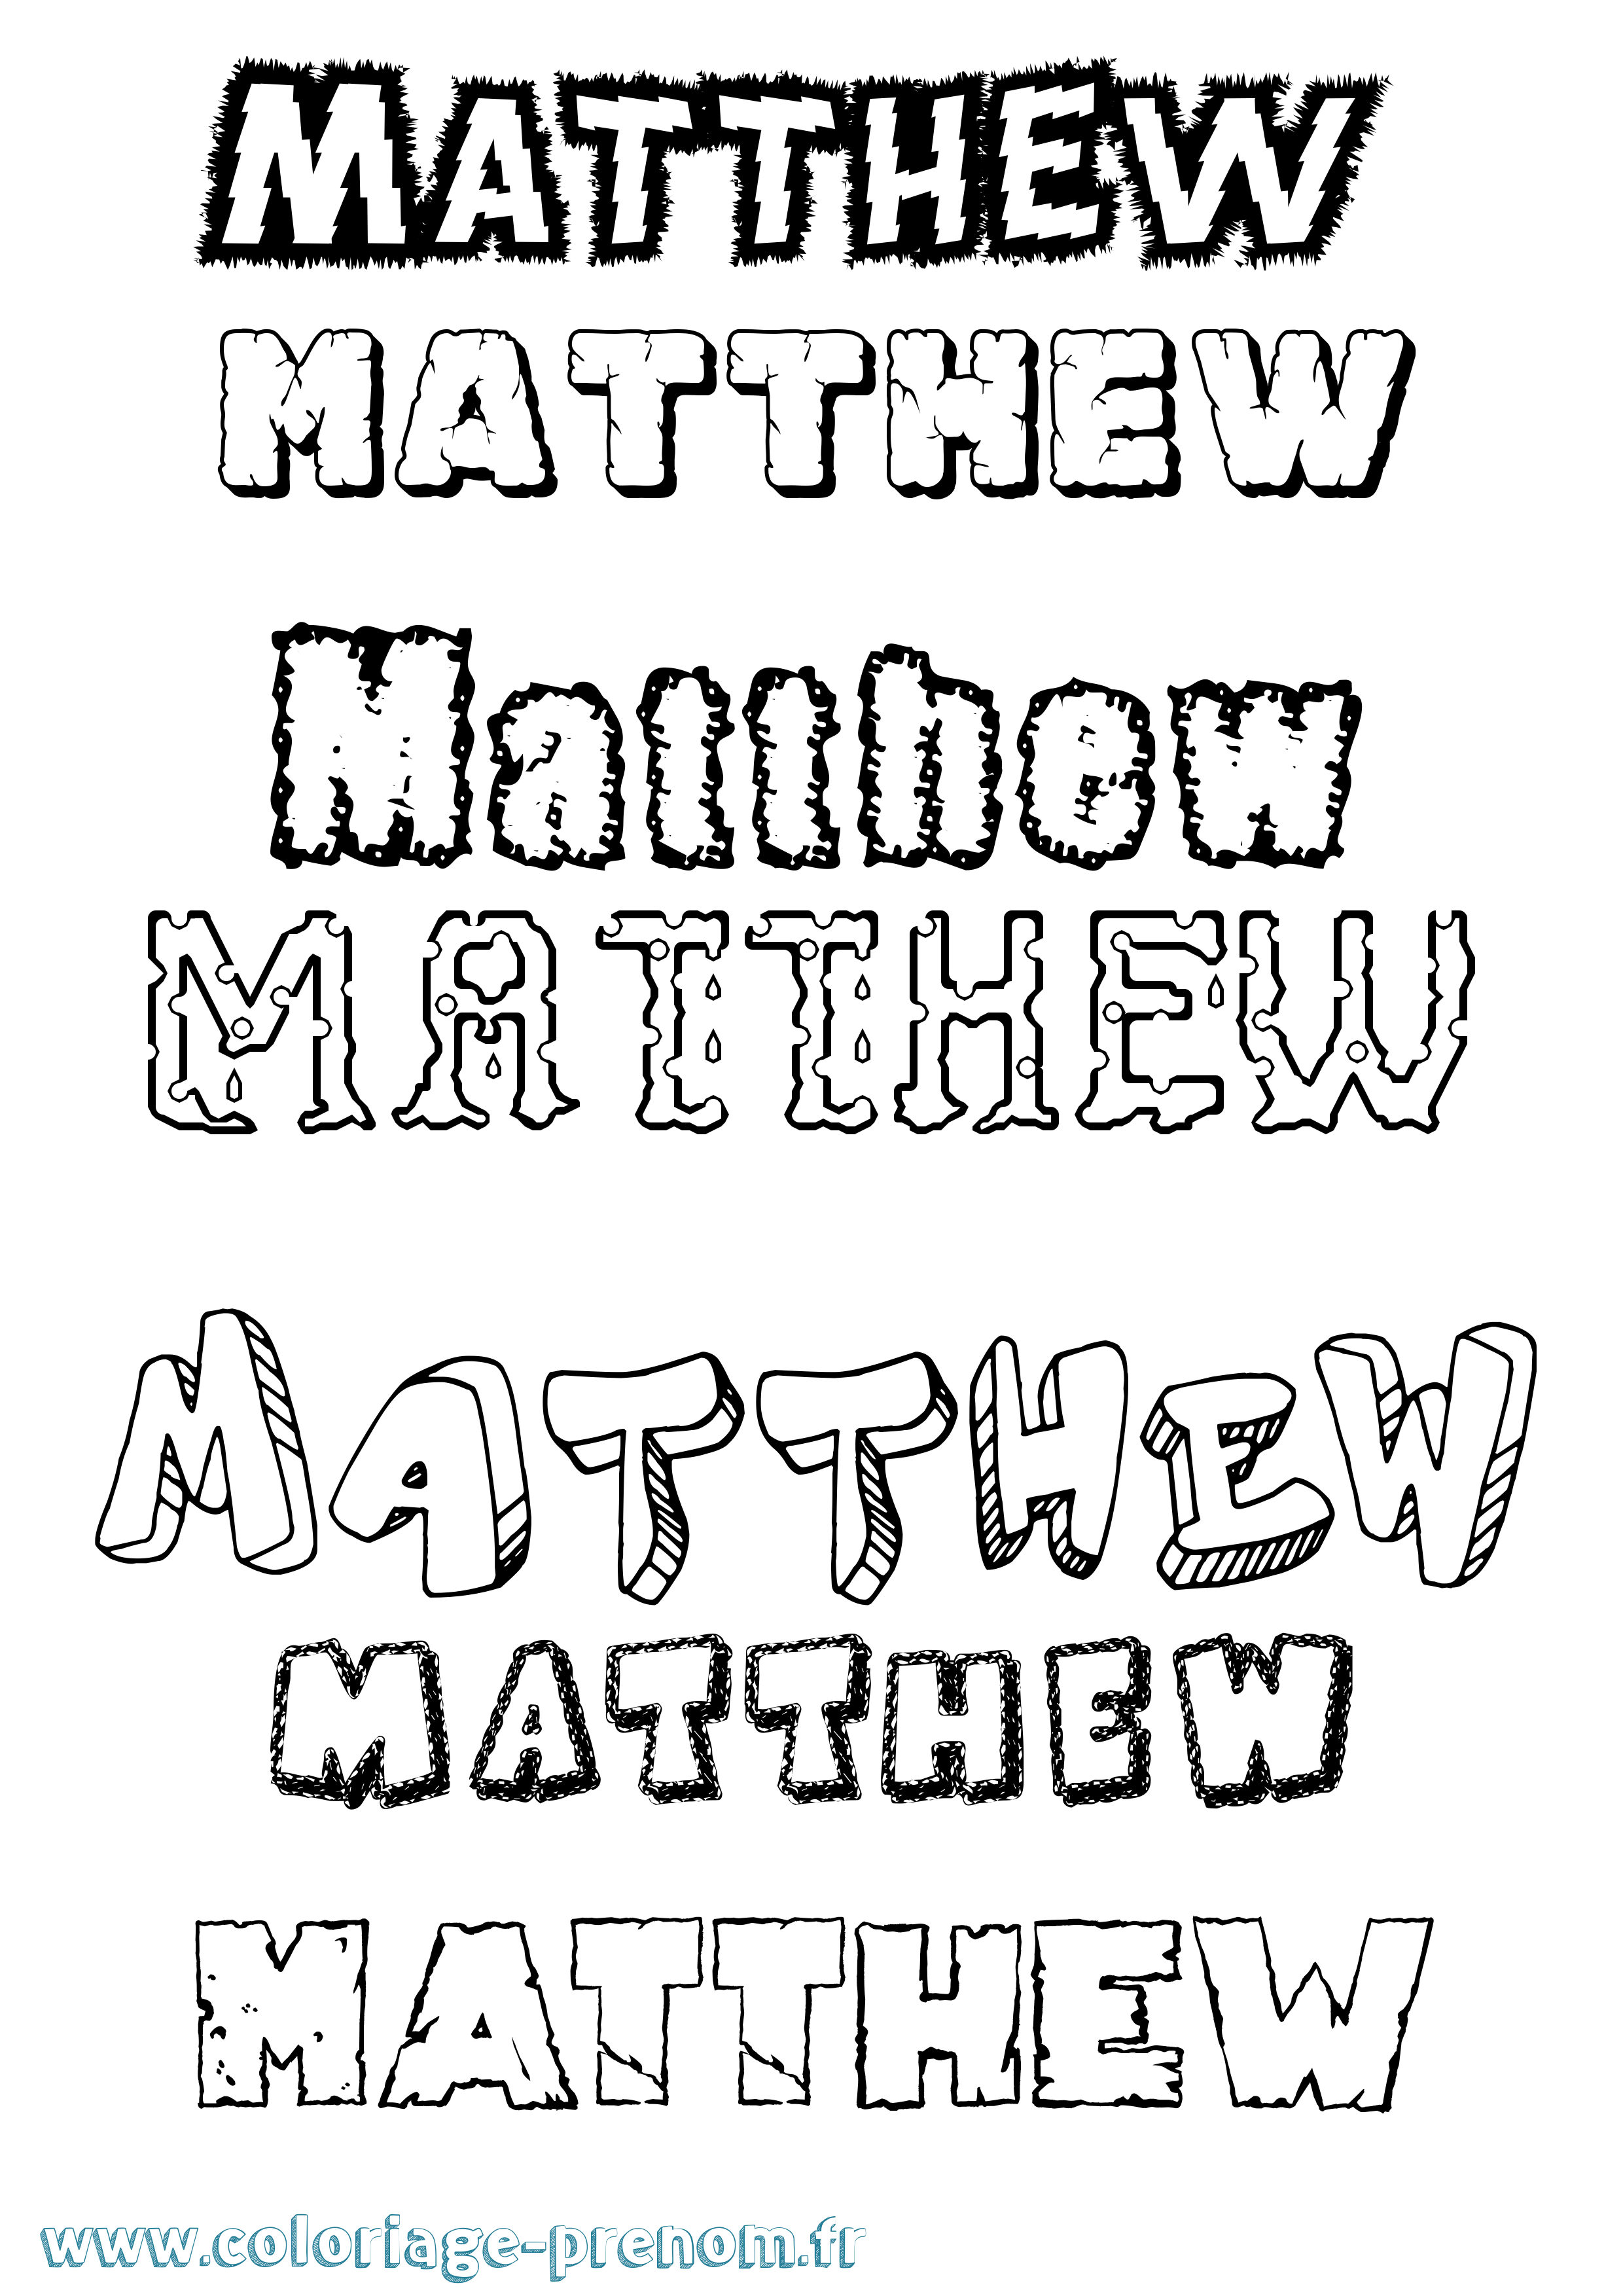 Coloriage prénom Matthew